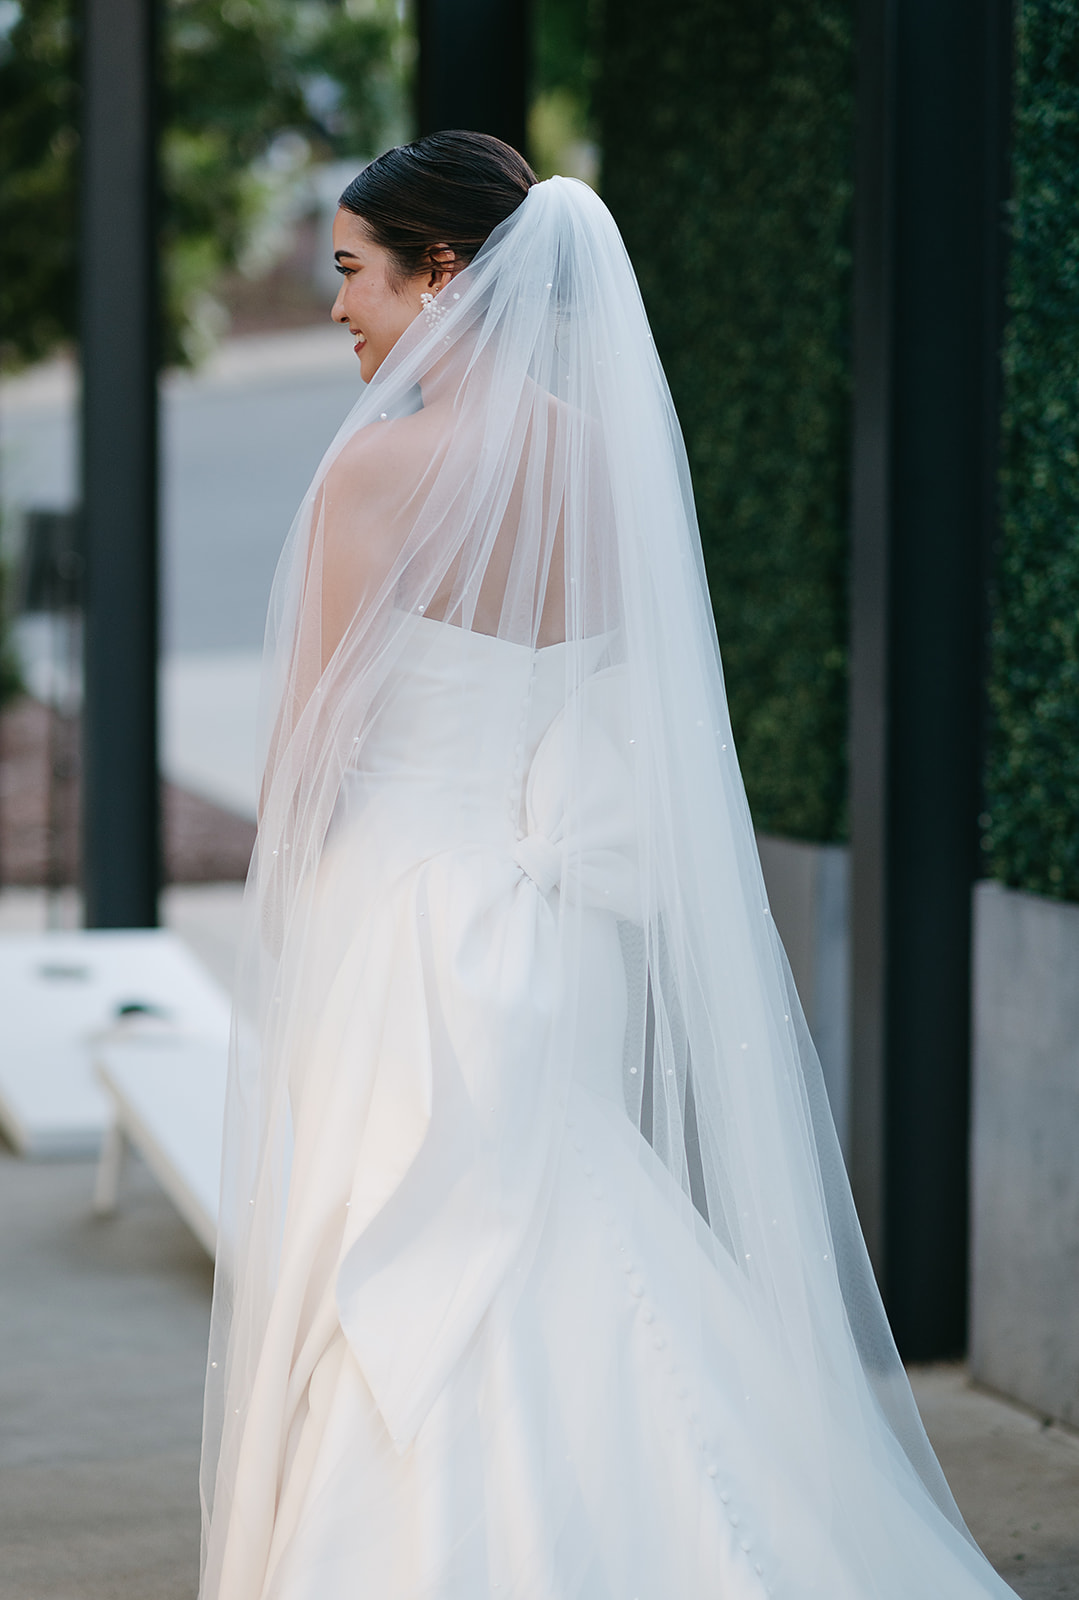 A bride stands in a garden wearing a silk dress and long veil at Saint Elle Wedding venue.